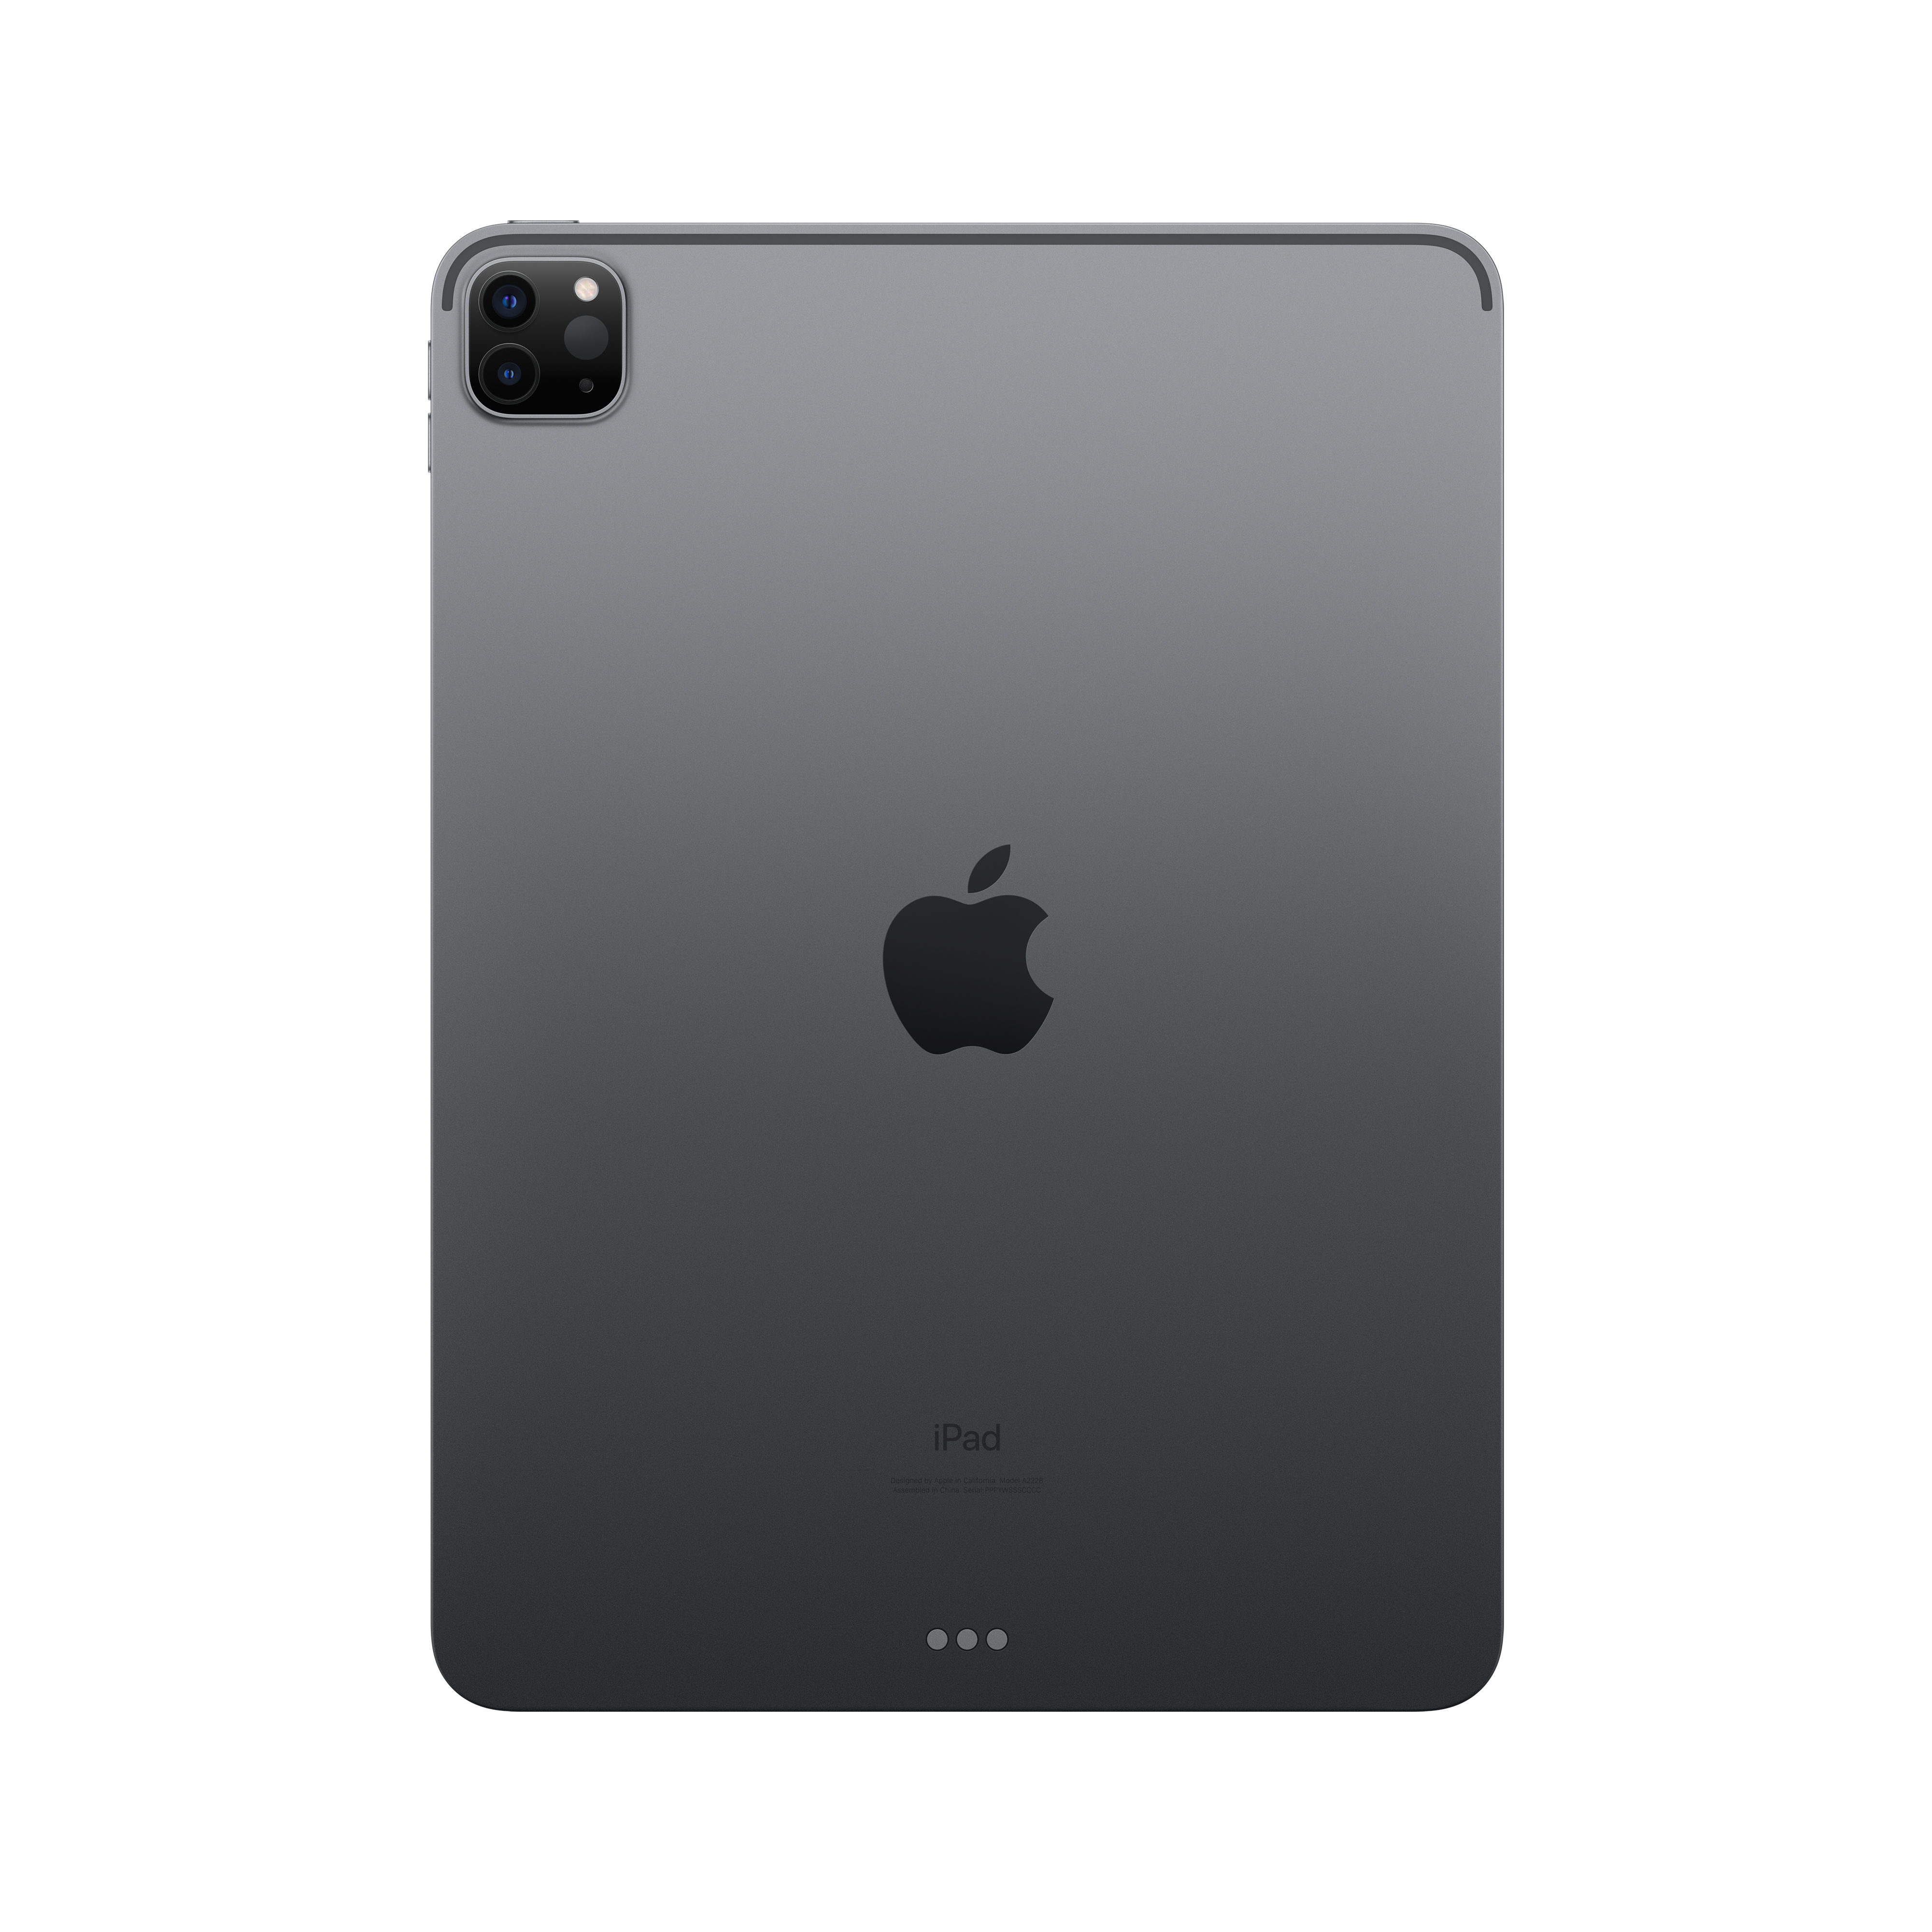 Apple 11-inch iPad Pro (2020) Wi-Fi 256GB - Space Gray - image 9 of 10